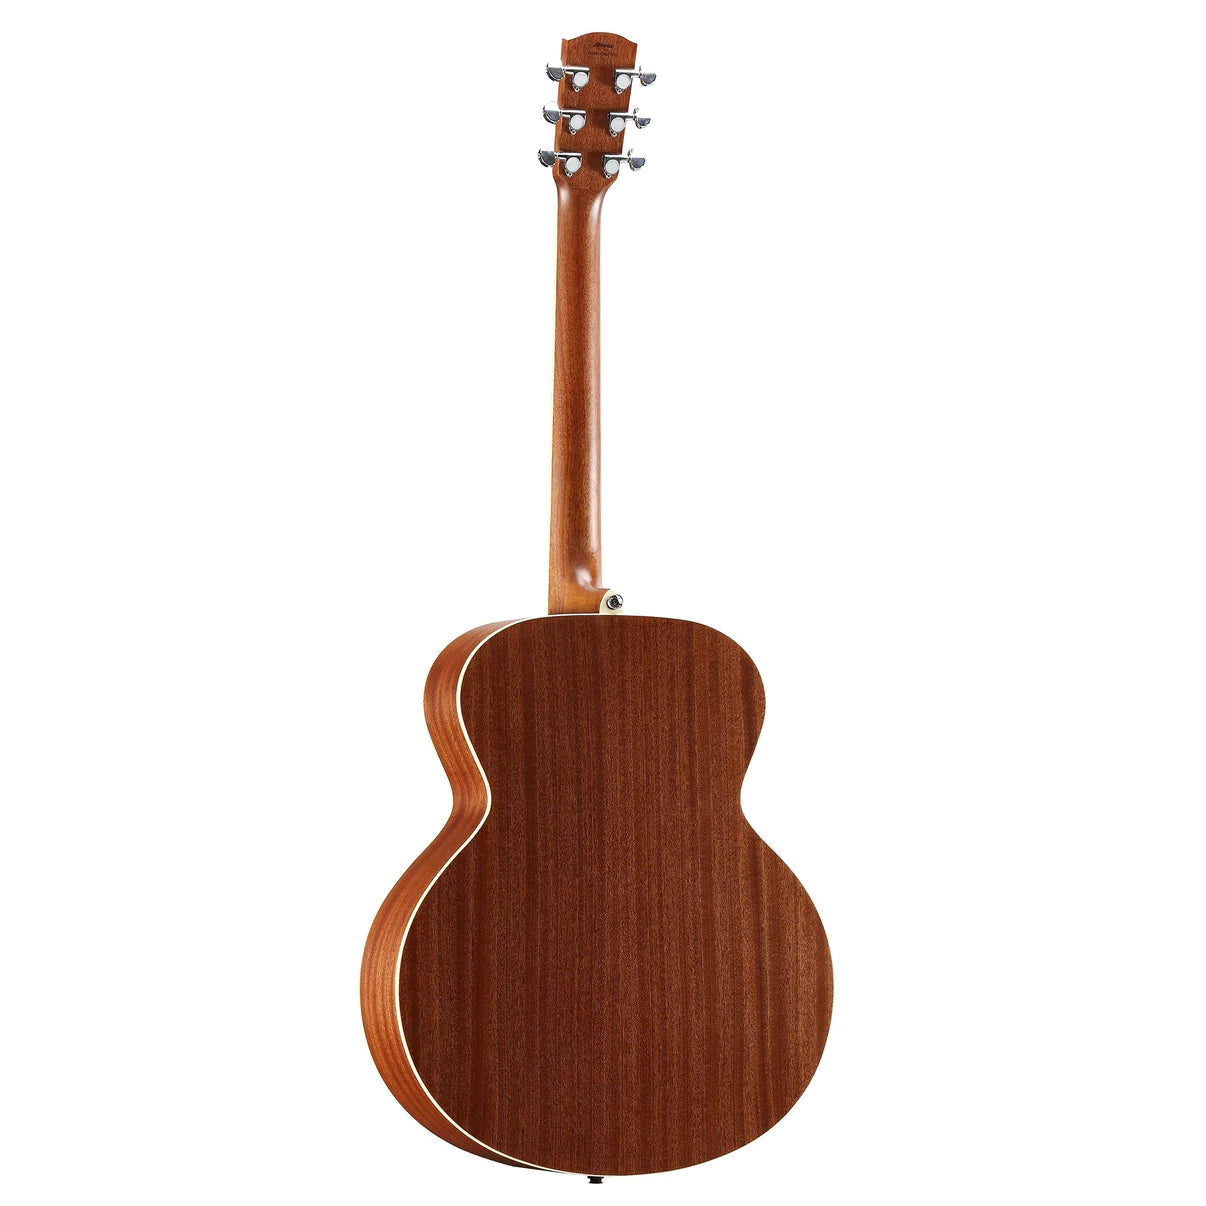 Alvarez ABT60E Acoustic Electric Baritone Guitar in Natural